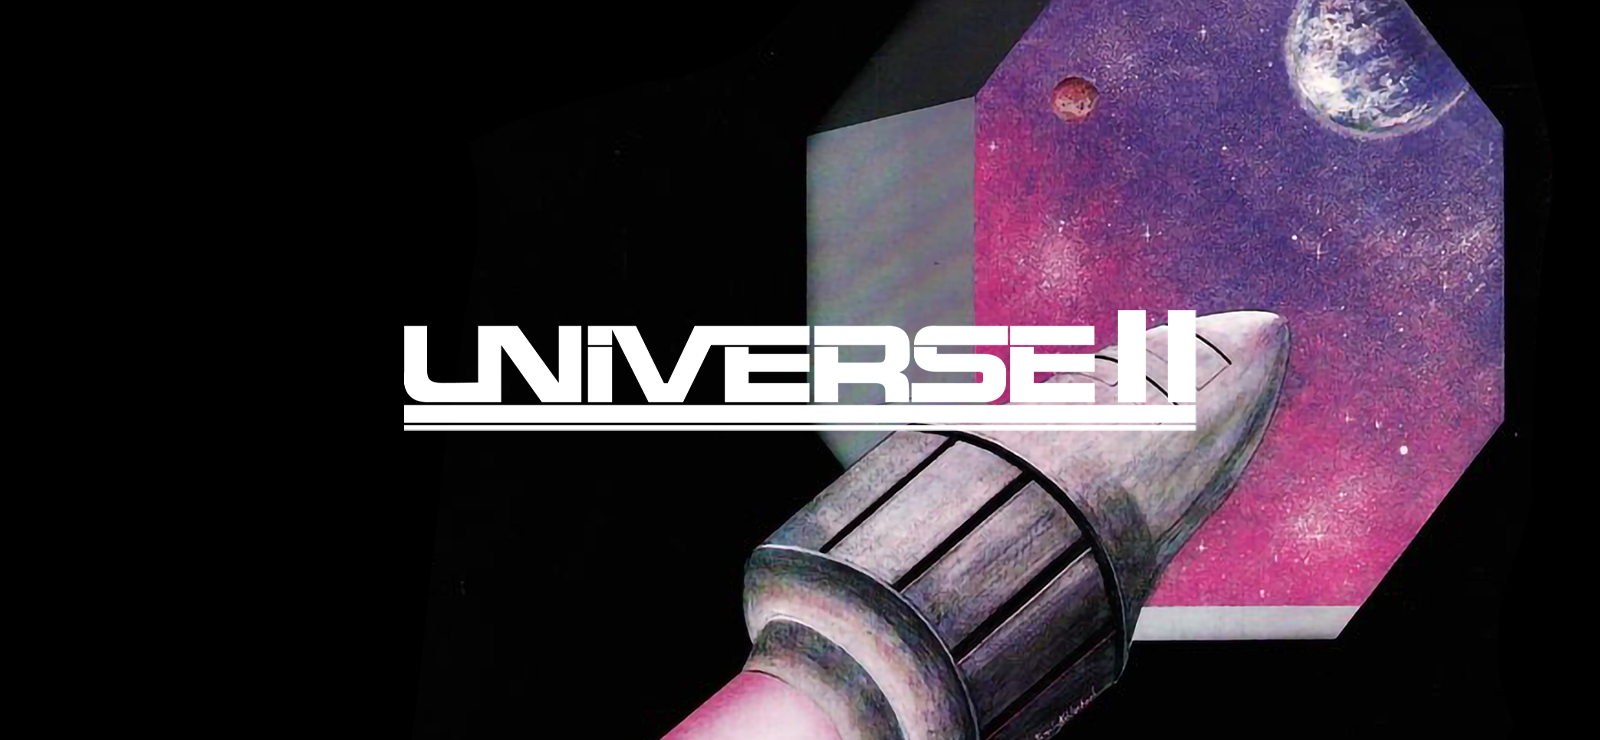 Universe 2